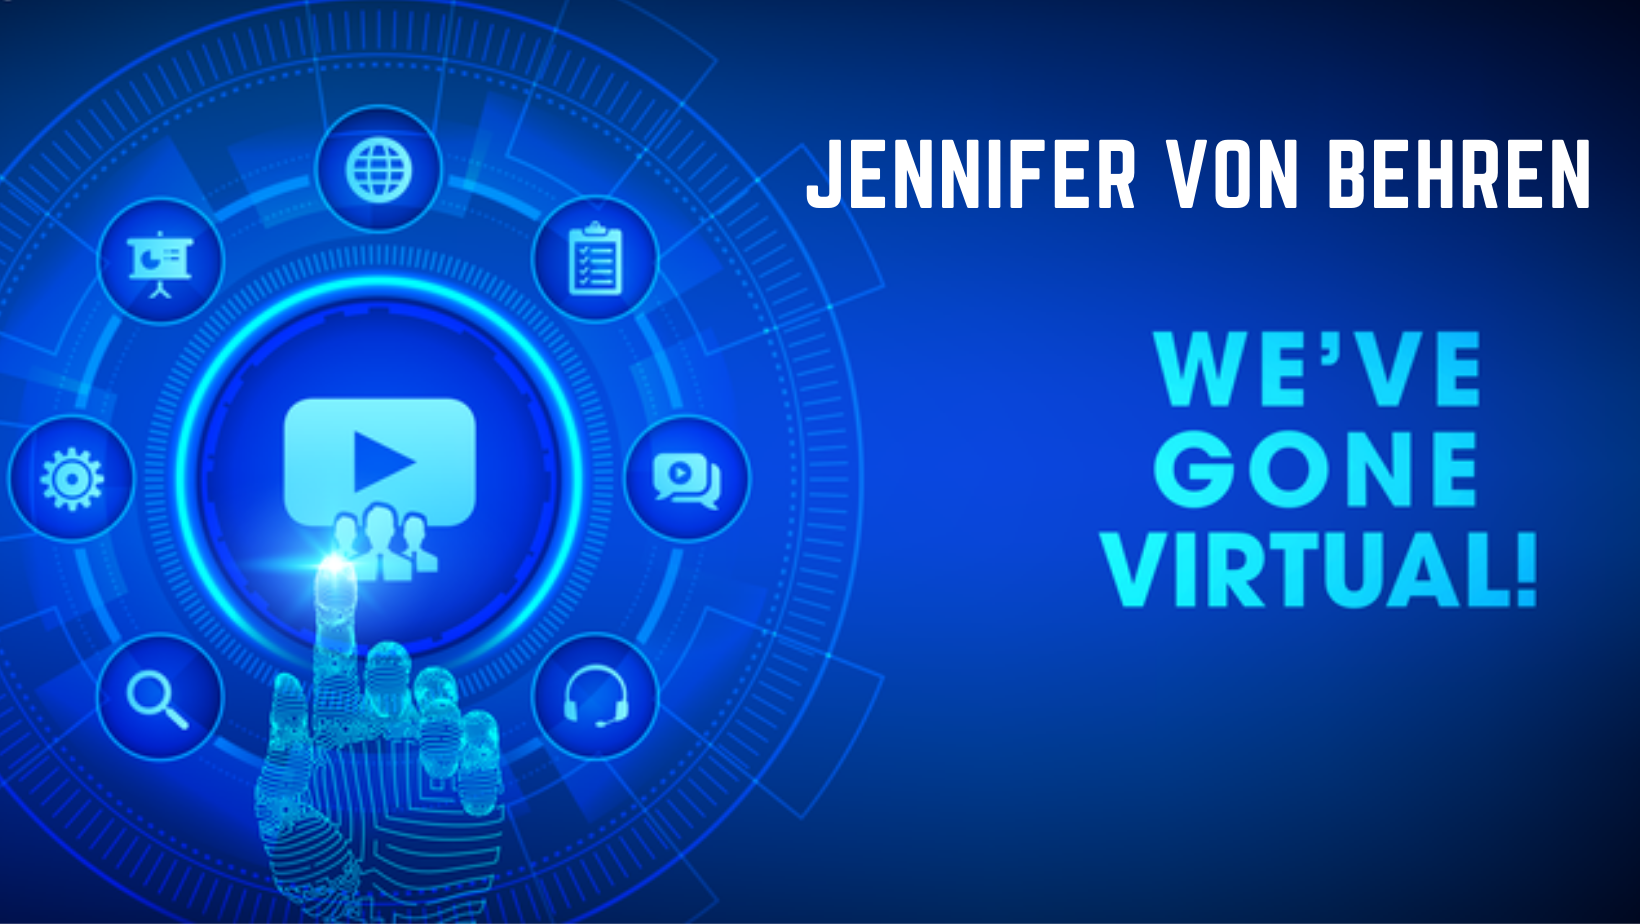 JVB Has Gone Virtual